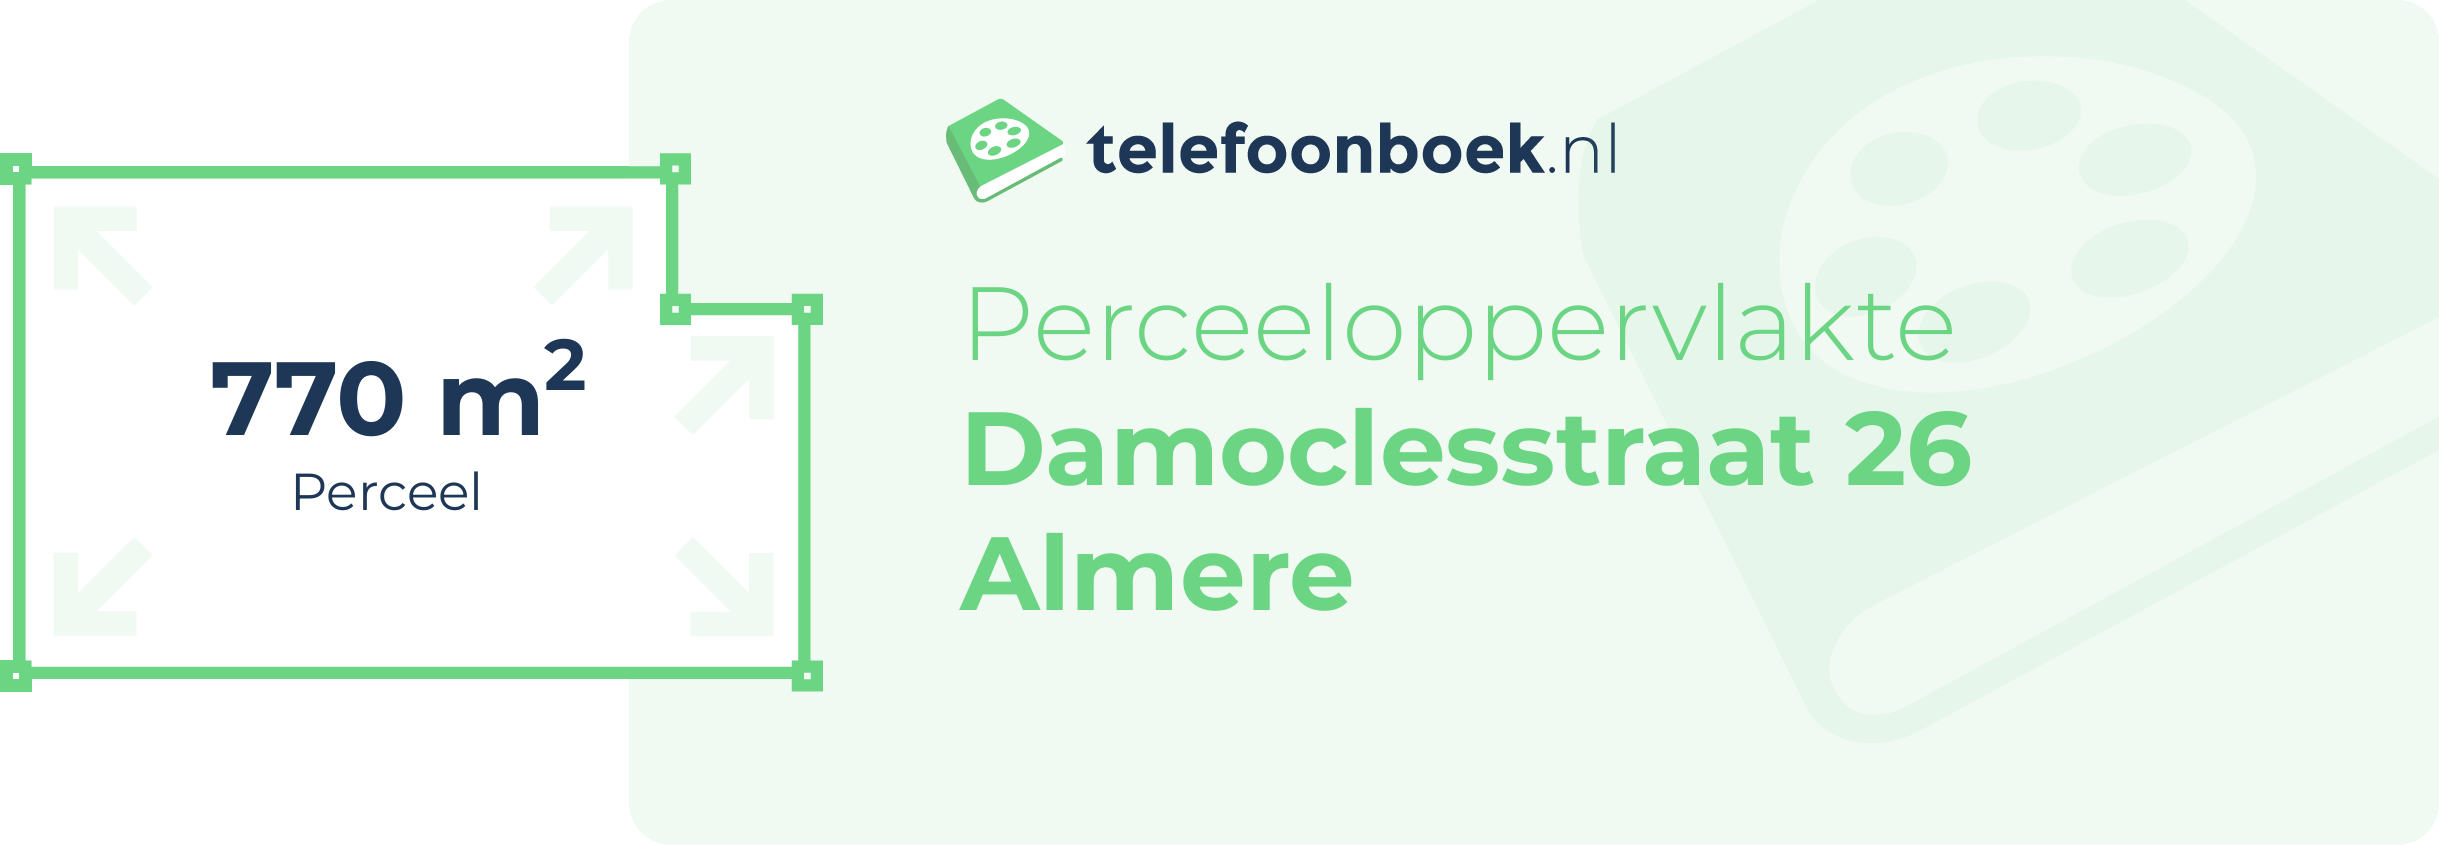 Perceeloppervlakte Damoclesstraat 26 Almere